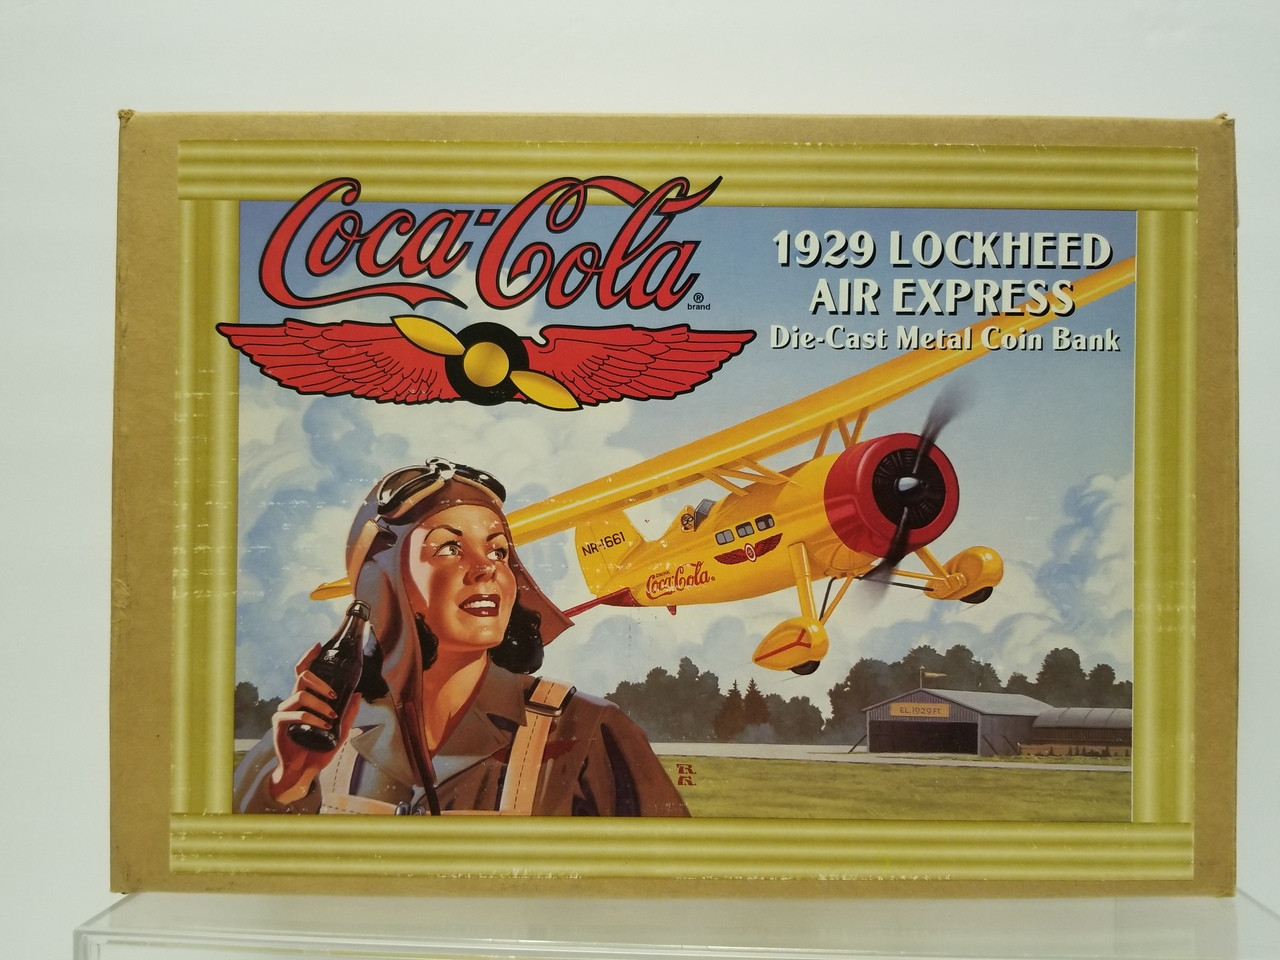 Coca Cola - 1929 Lockheed Air Express Die-Cast Metal Coin Bank